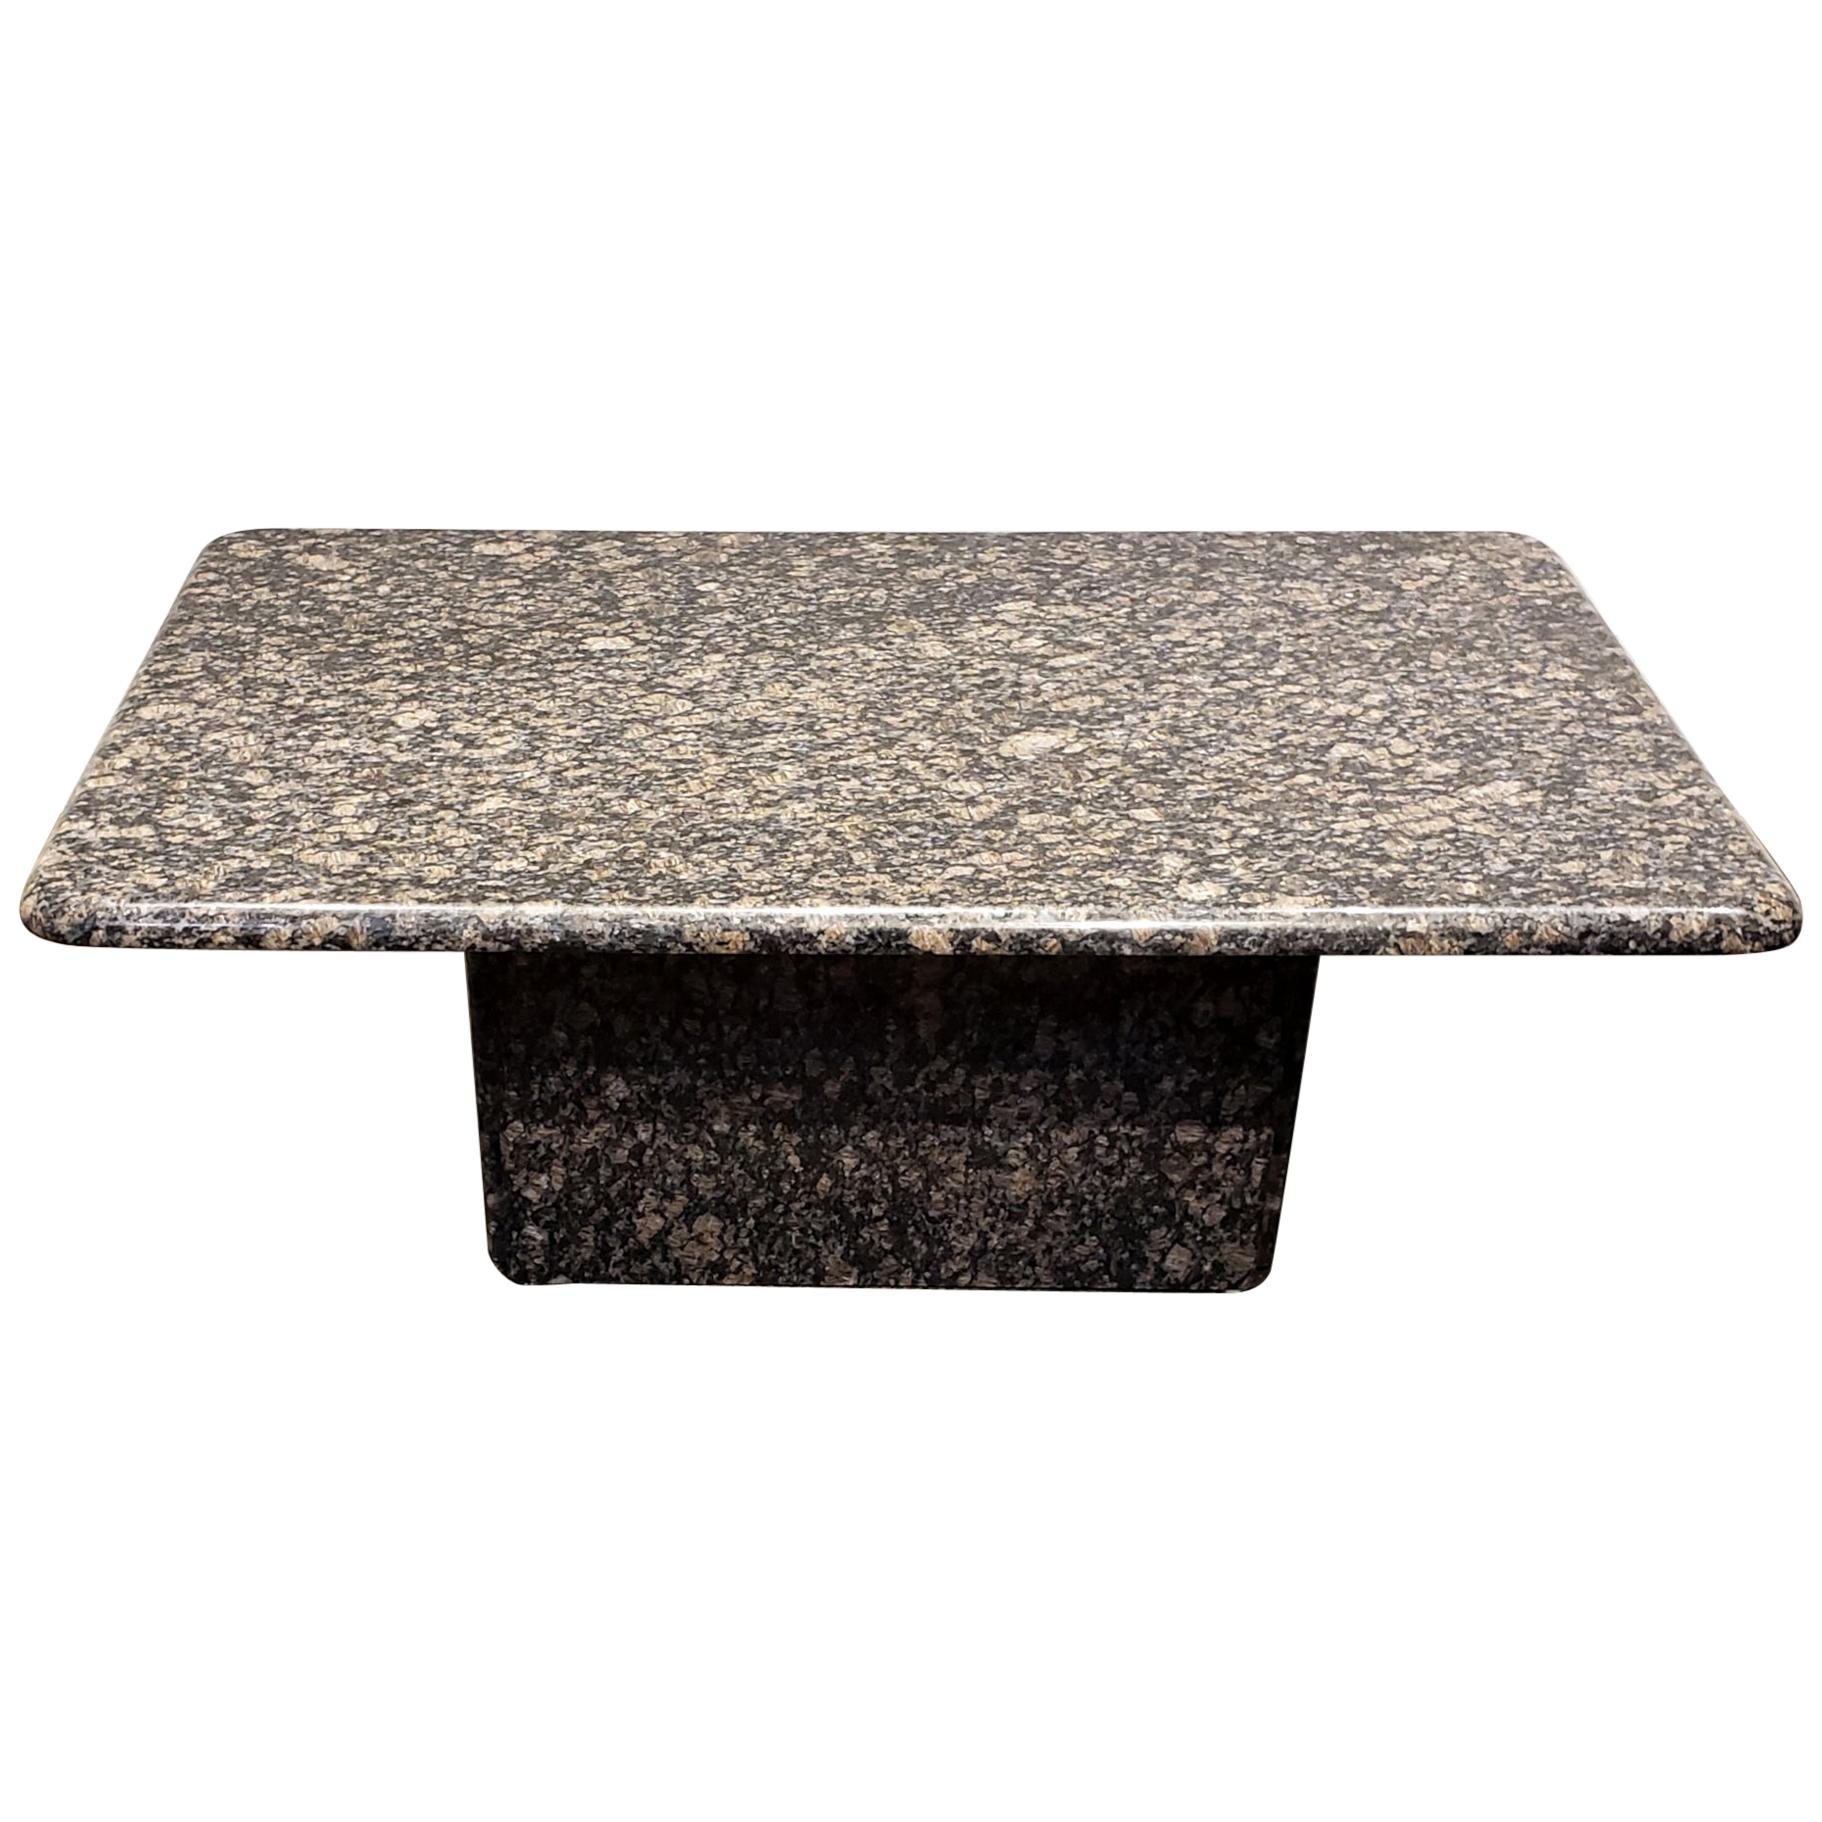 1980s Minimalist Geometric Italian Granite Coffee Table Black Tan Gray For Sale